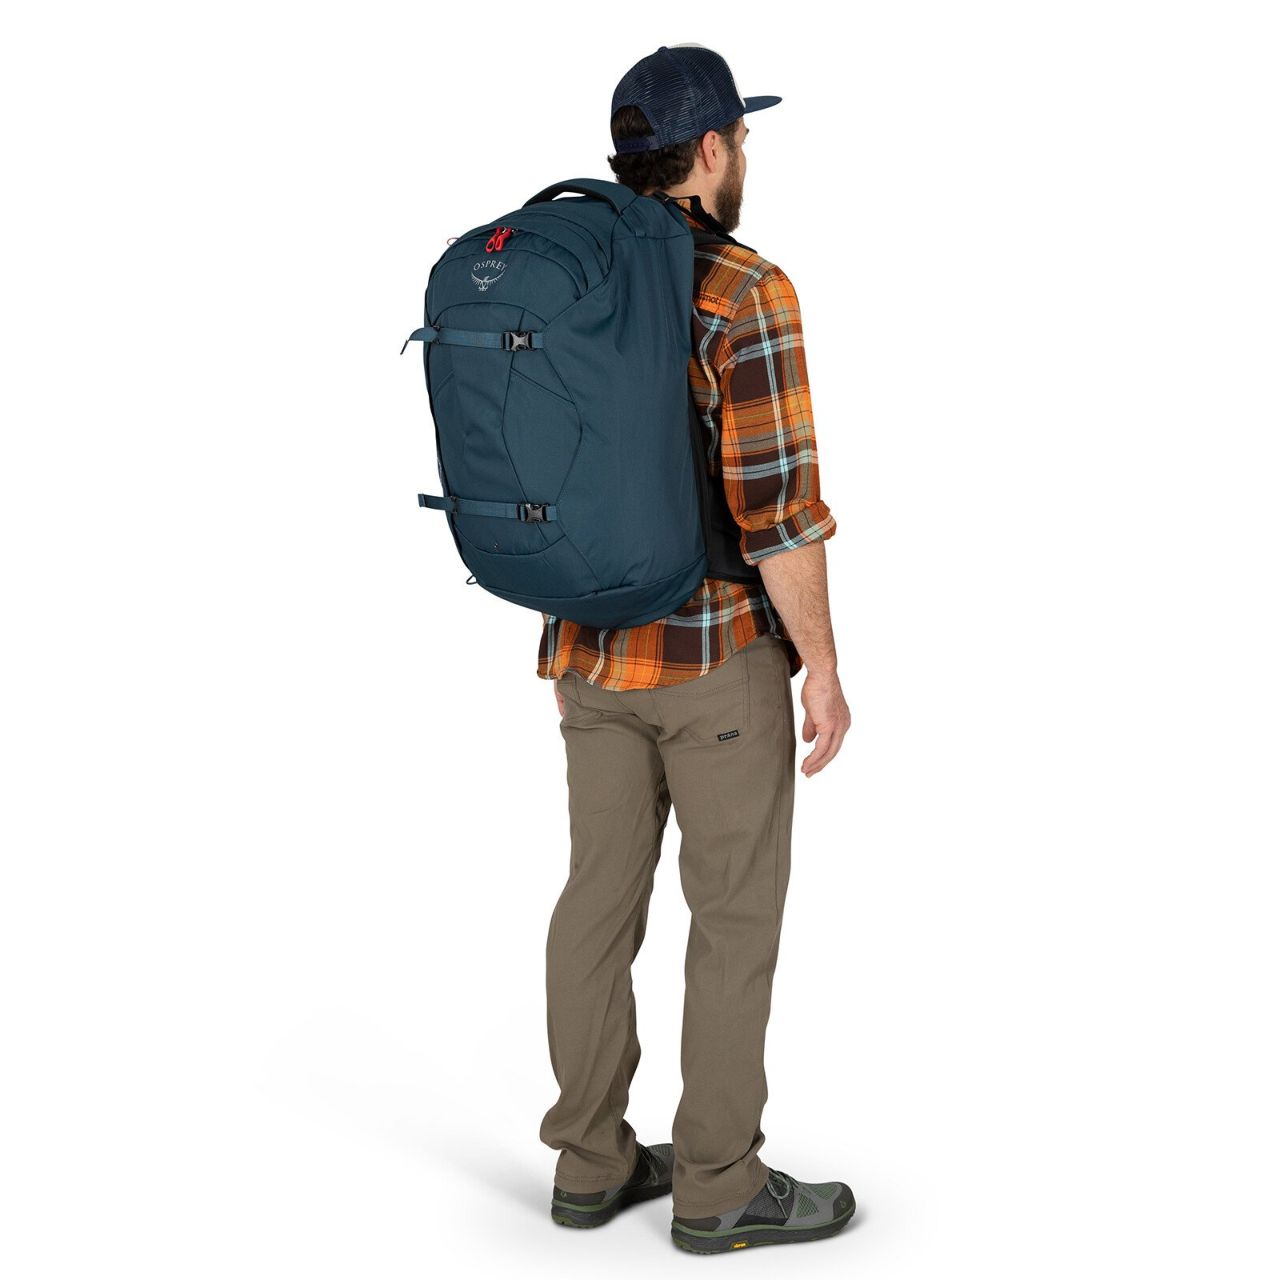 Farpoint® 40 Travel Pack - Men's Trekking Carry-On Backpack